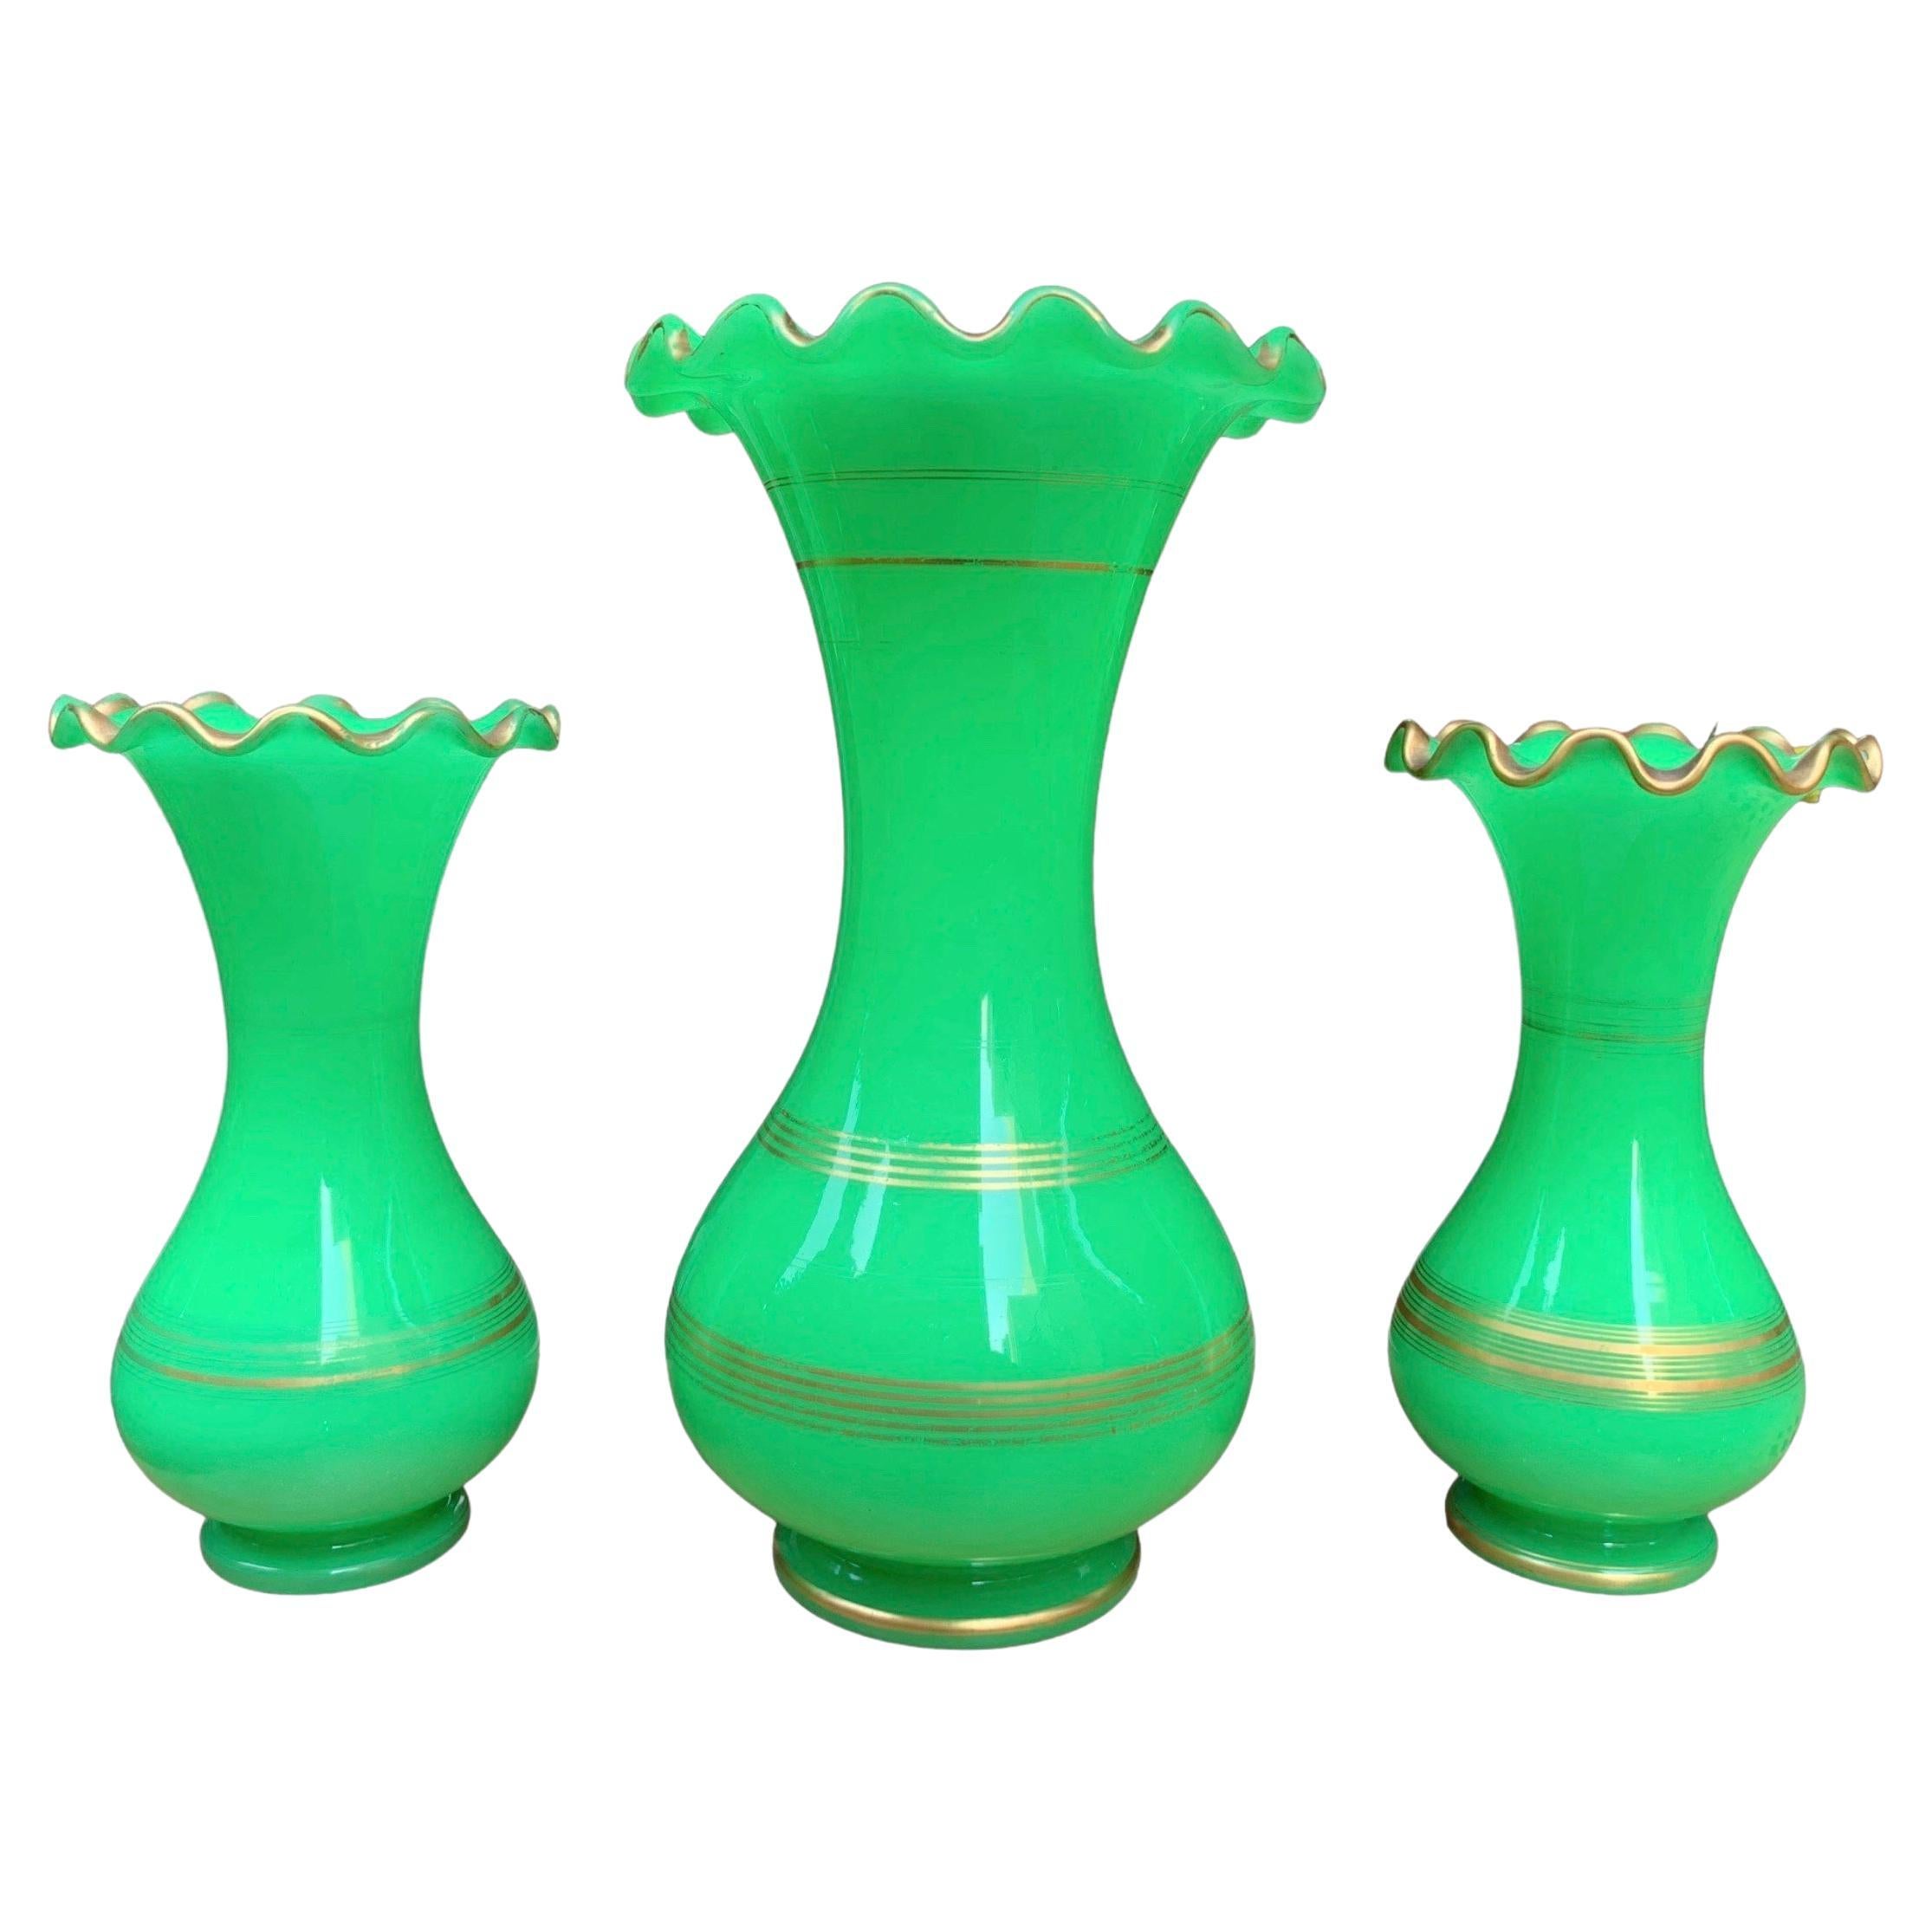 3 vases français anciens en verre opalin vert uranium jn, XIXe siècle